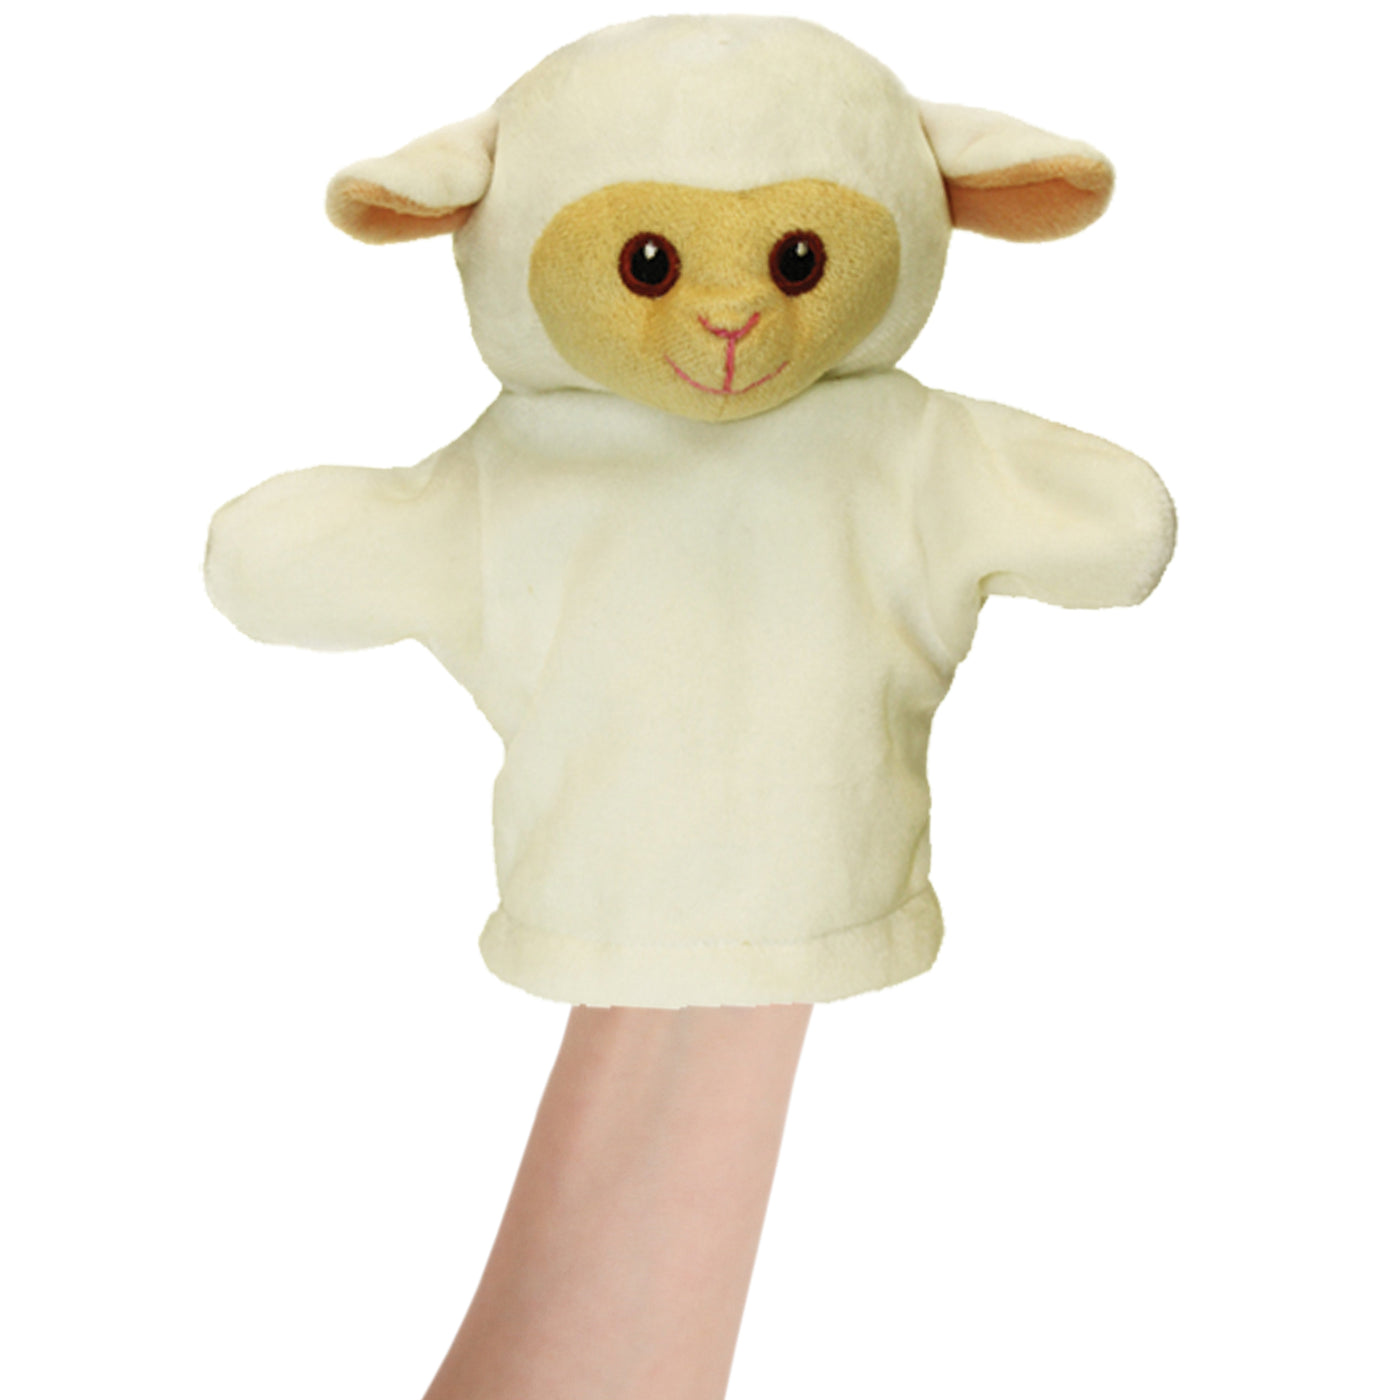 My First Puppet - Lamb